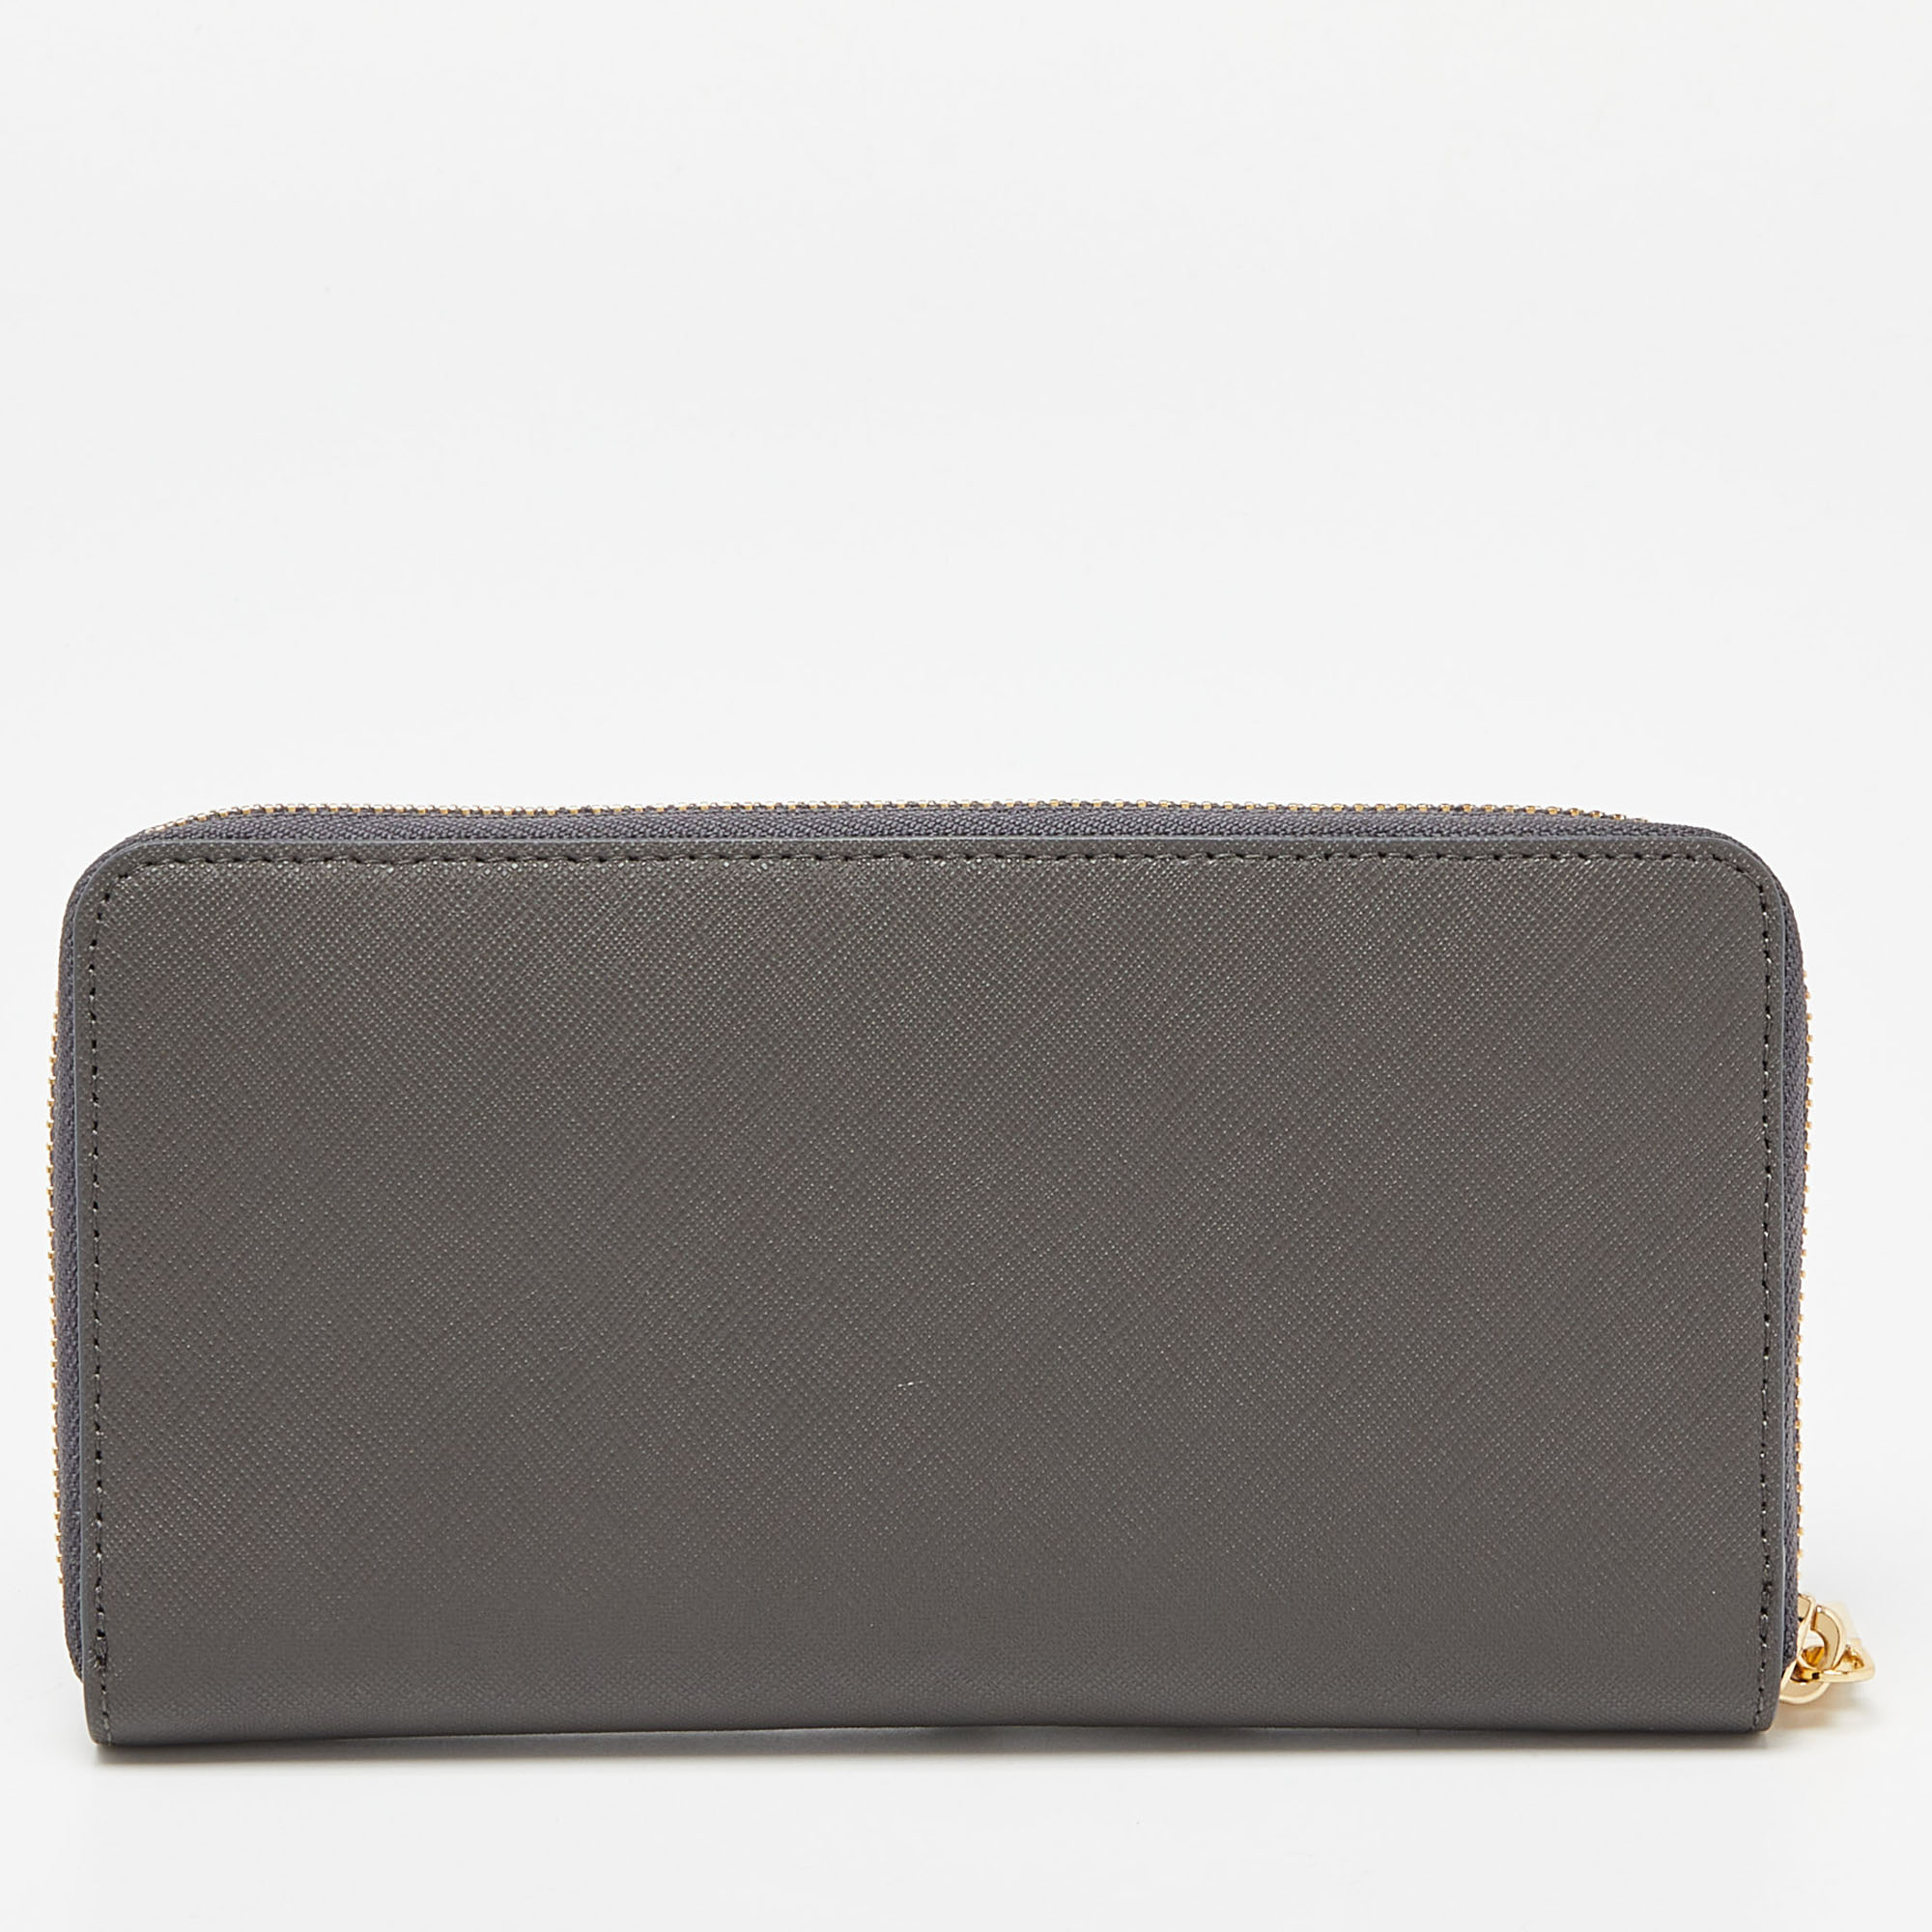 DKNY Grey Saffiano Leather Zip Around Wallet